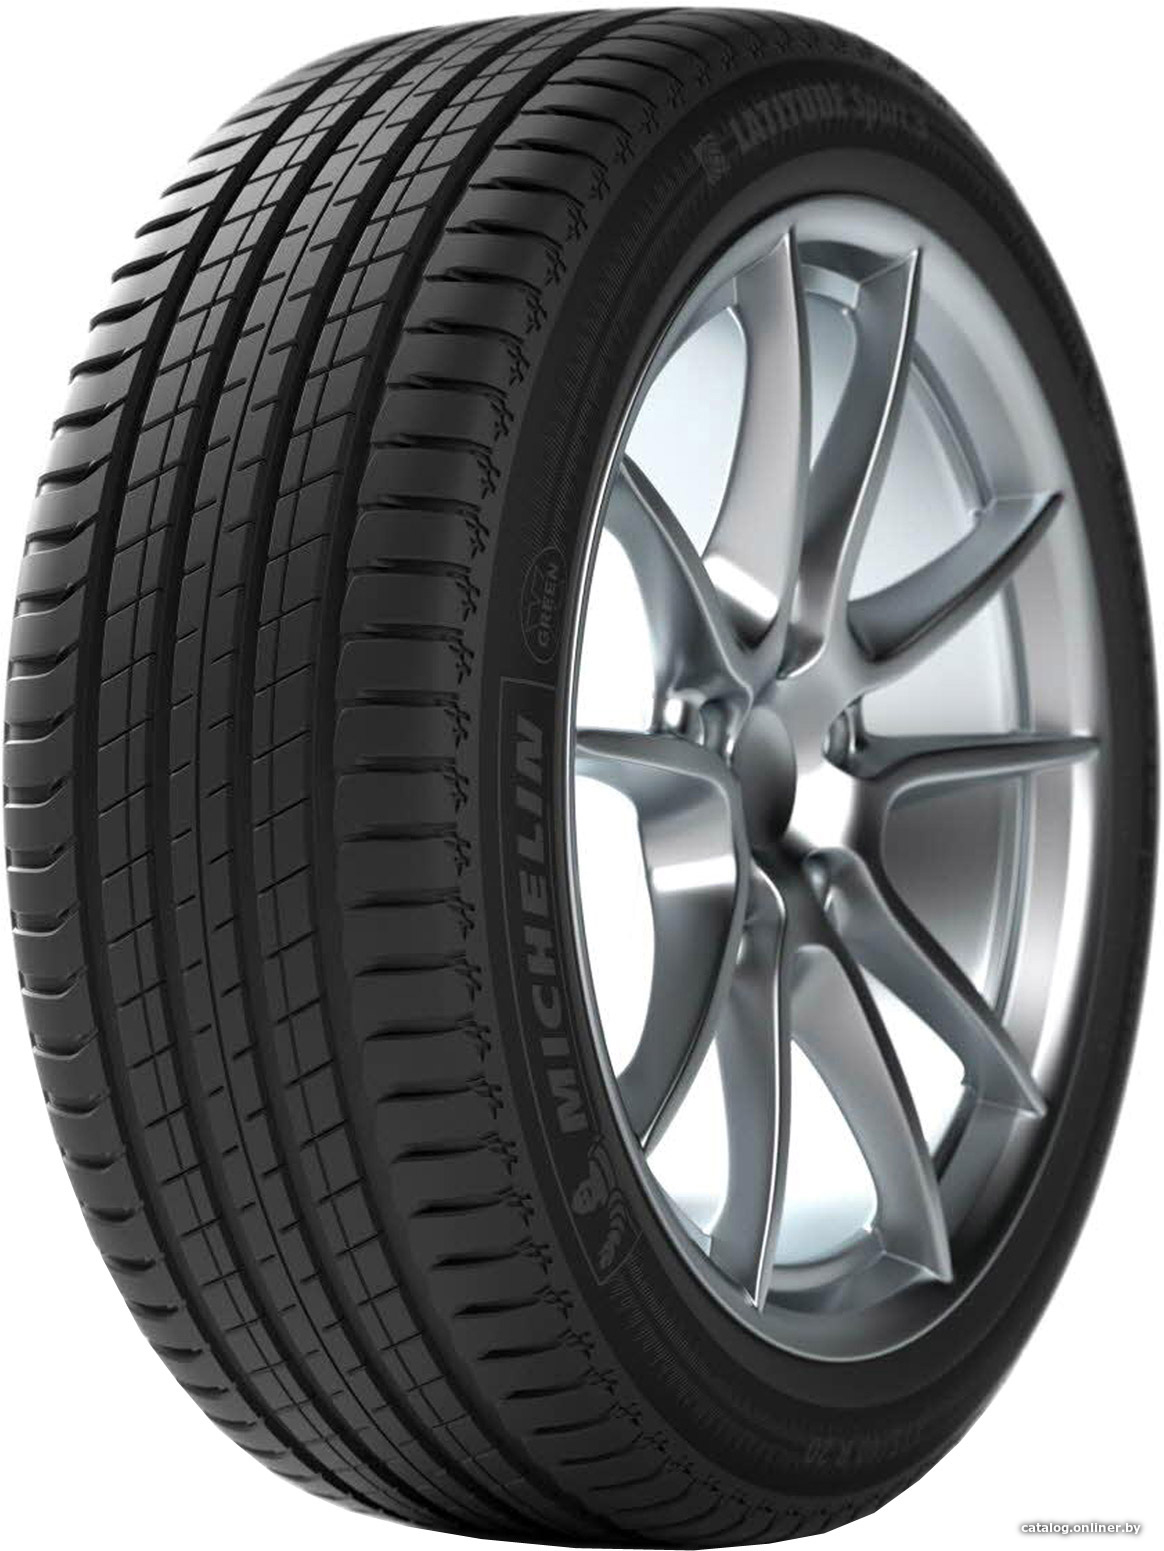 Автомобильные шины Michelin Latitude Sport 3 275/45R19 108Y